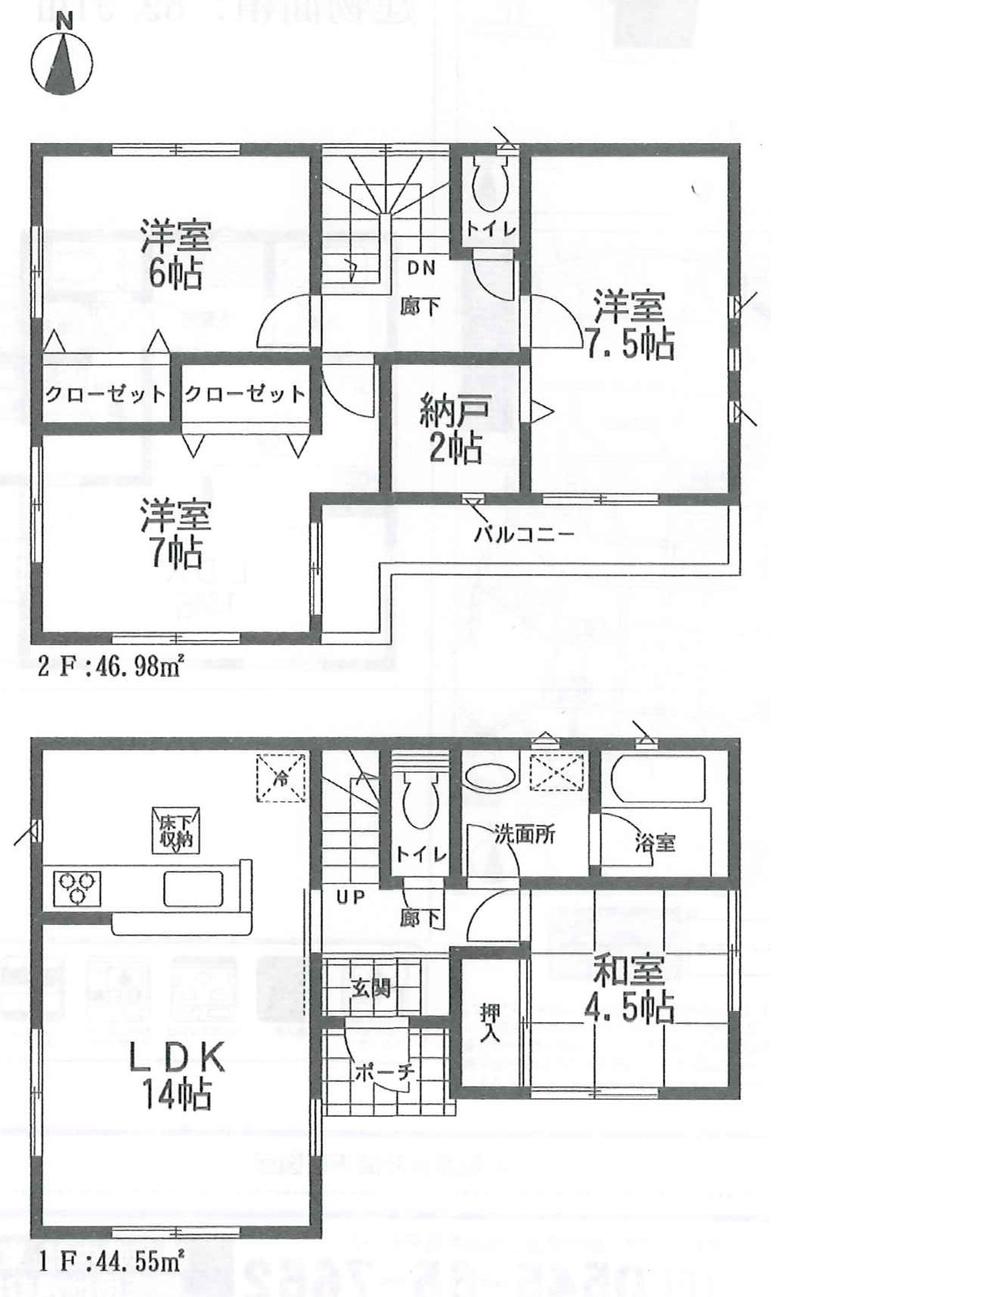 Floor plan. (3 Building), Price 20.8 million yen, 4LDK+S, Land area 180.29 sq m , Building area 91.53 sq m